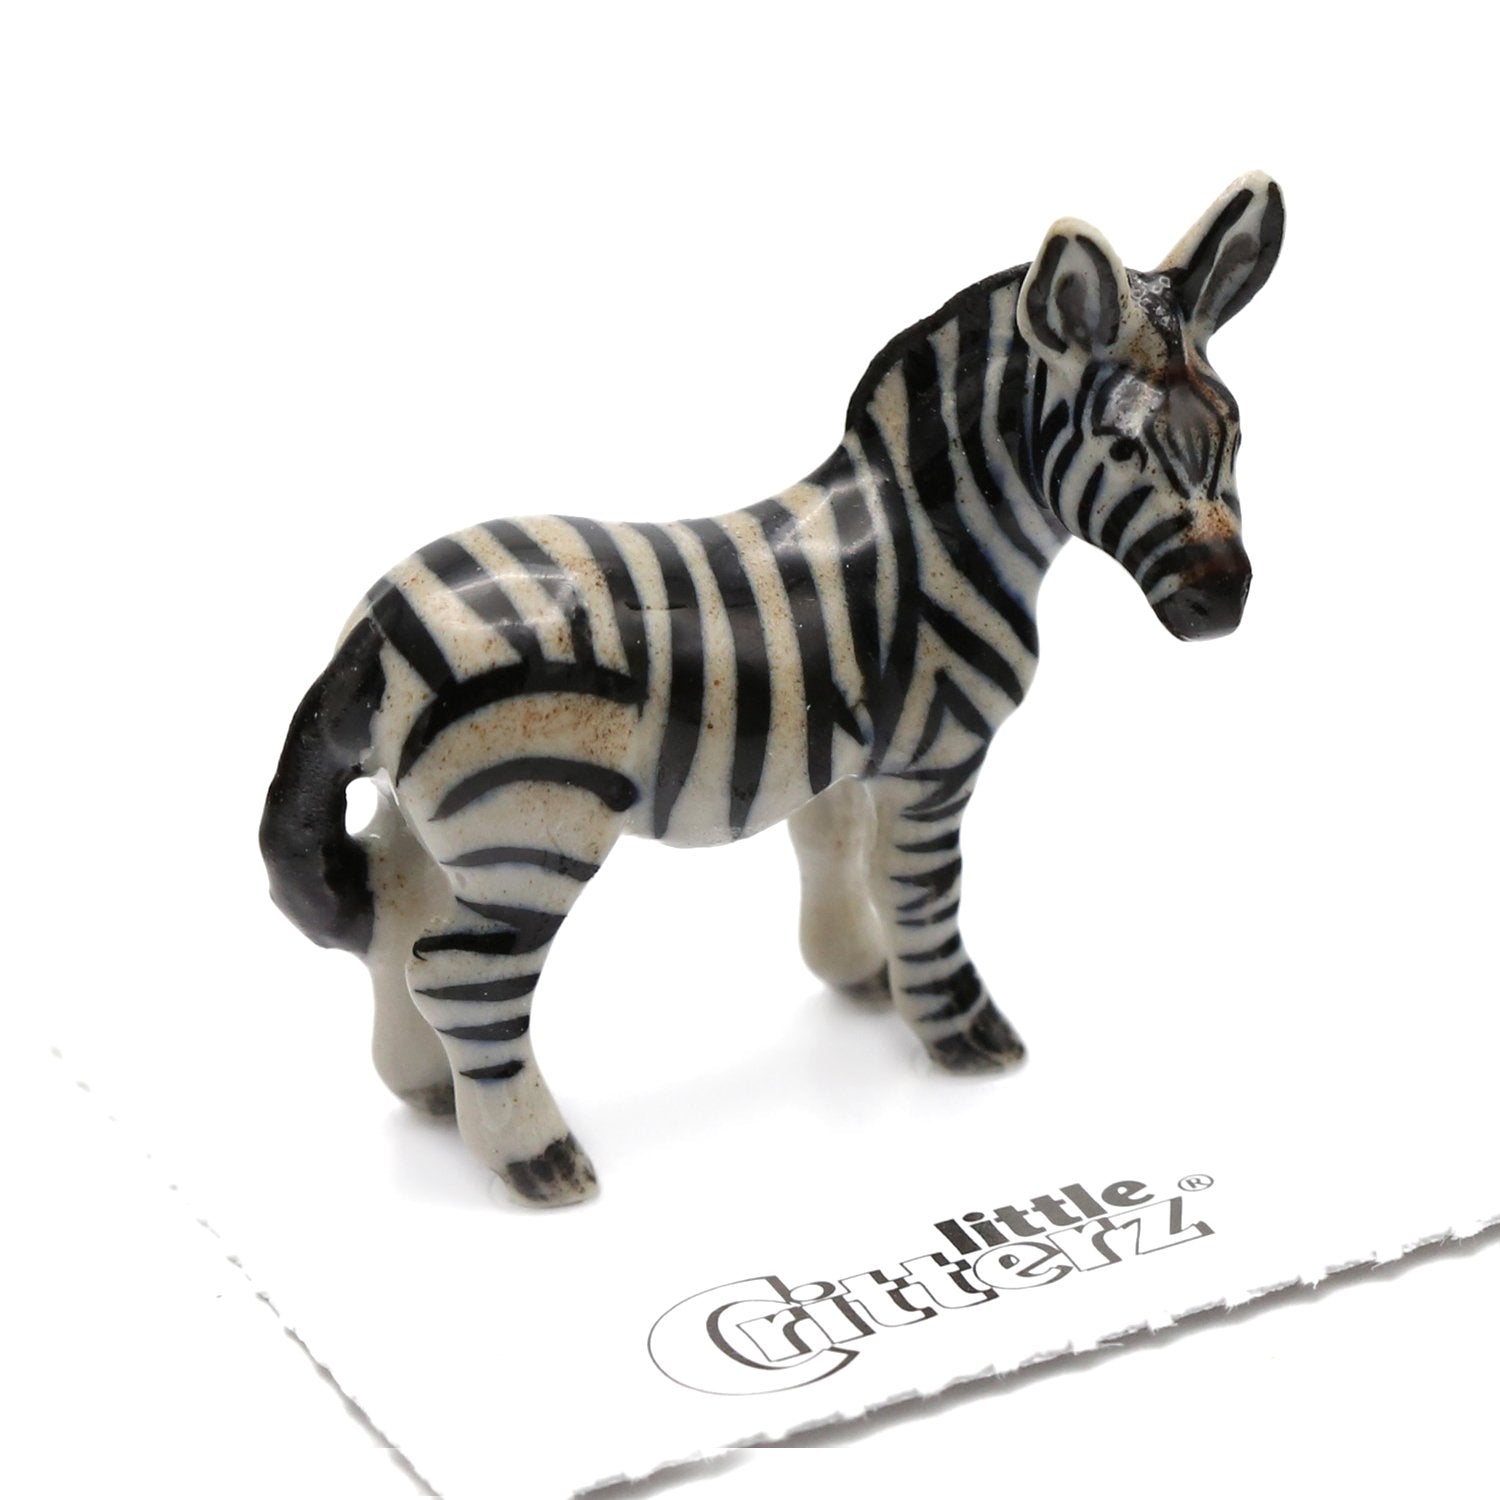 miniature zebra